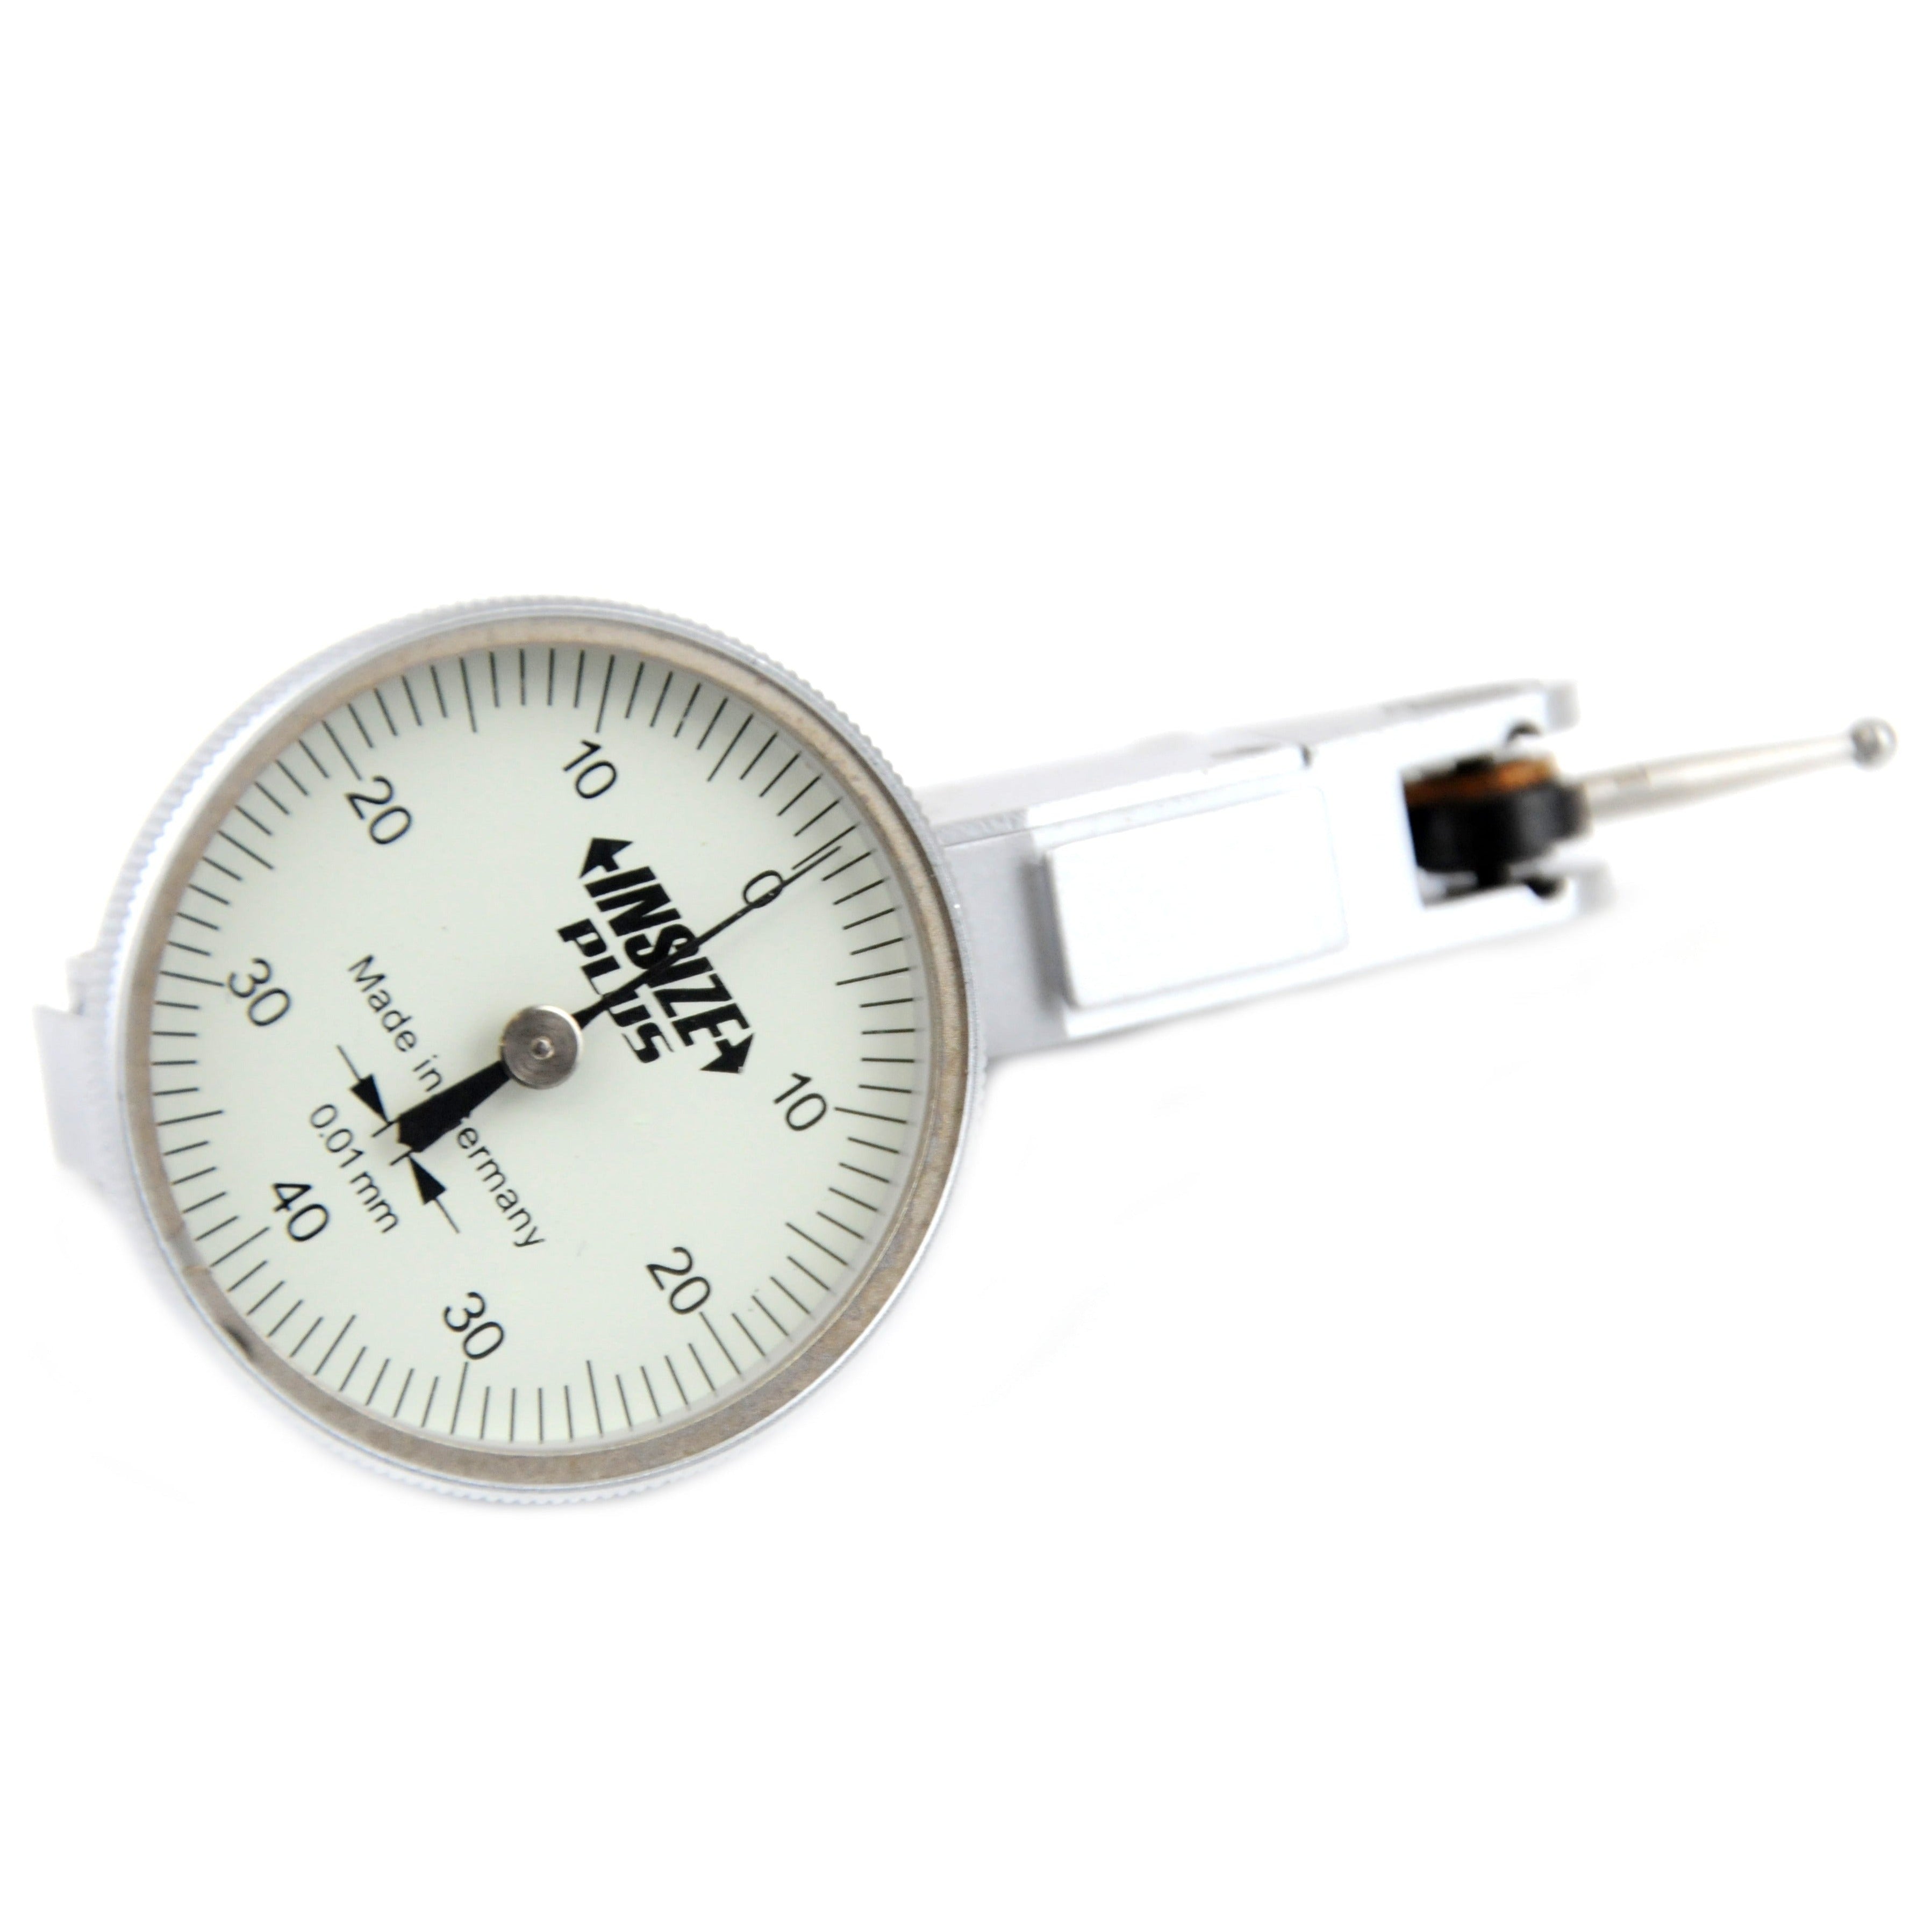 Insize Dial Test Indicator 0.8mm Range Series 2895-08